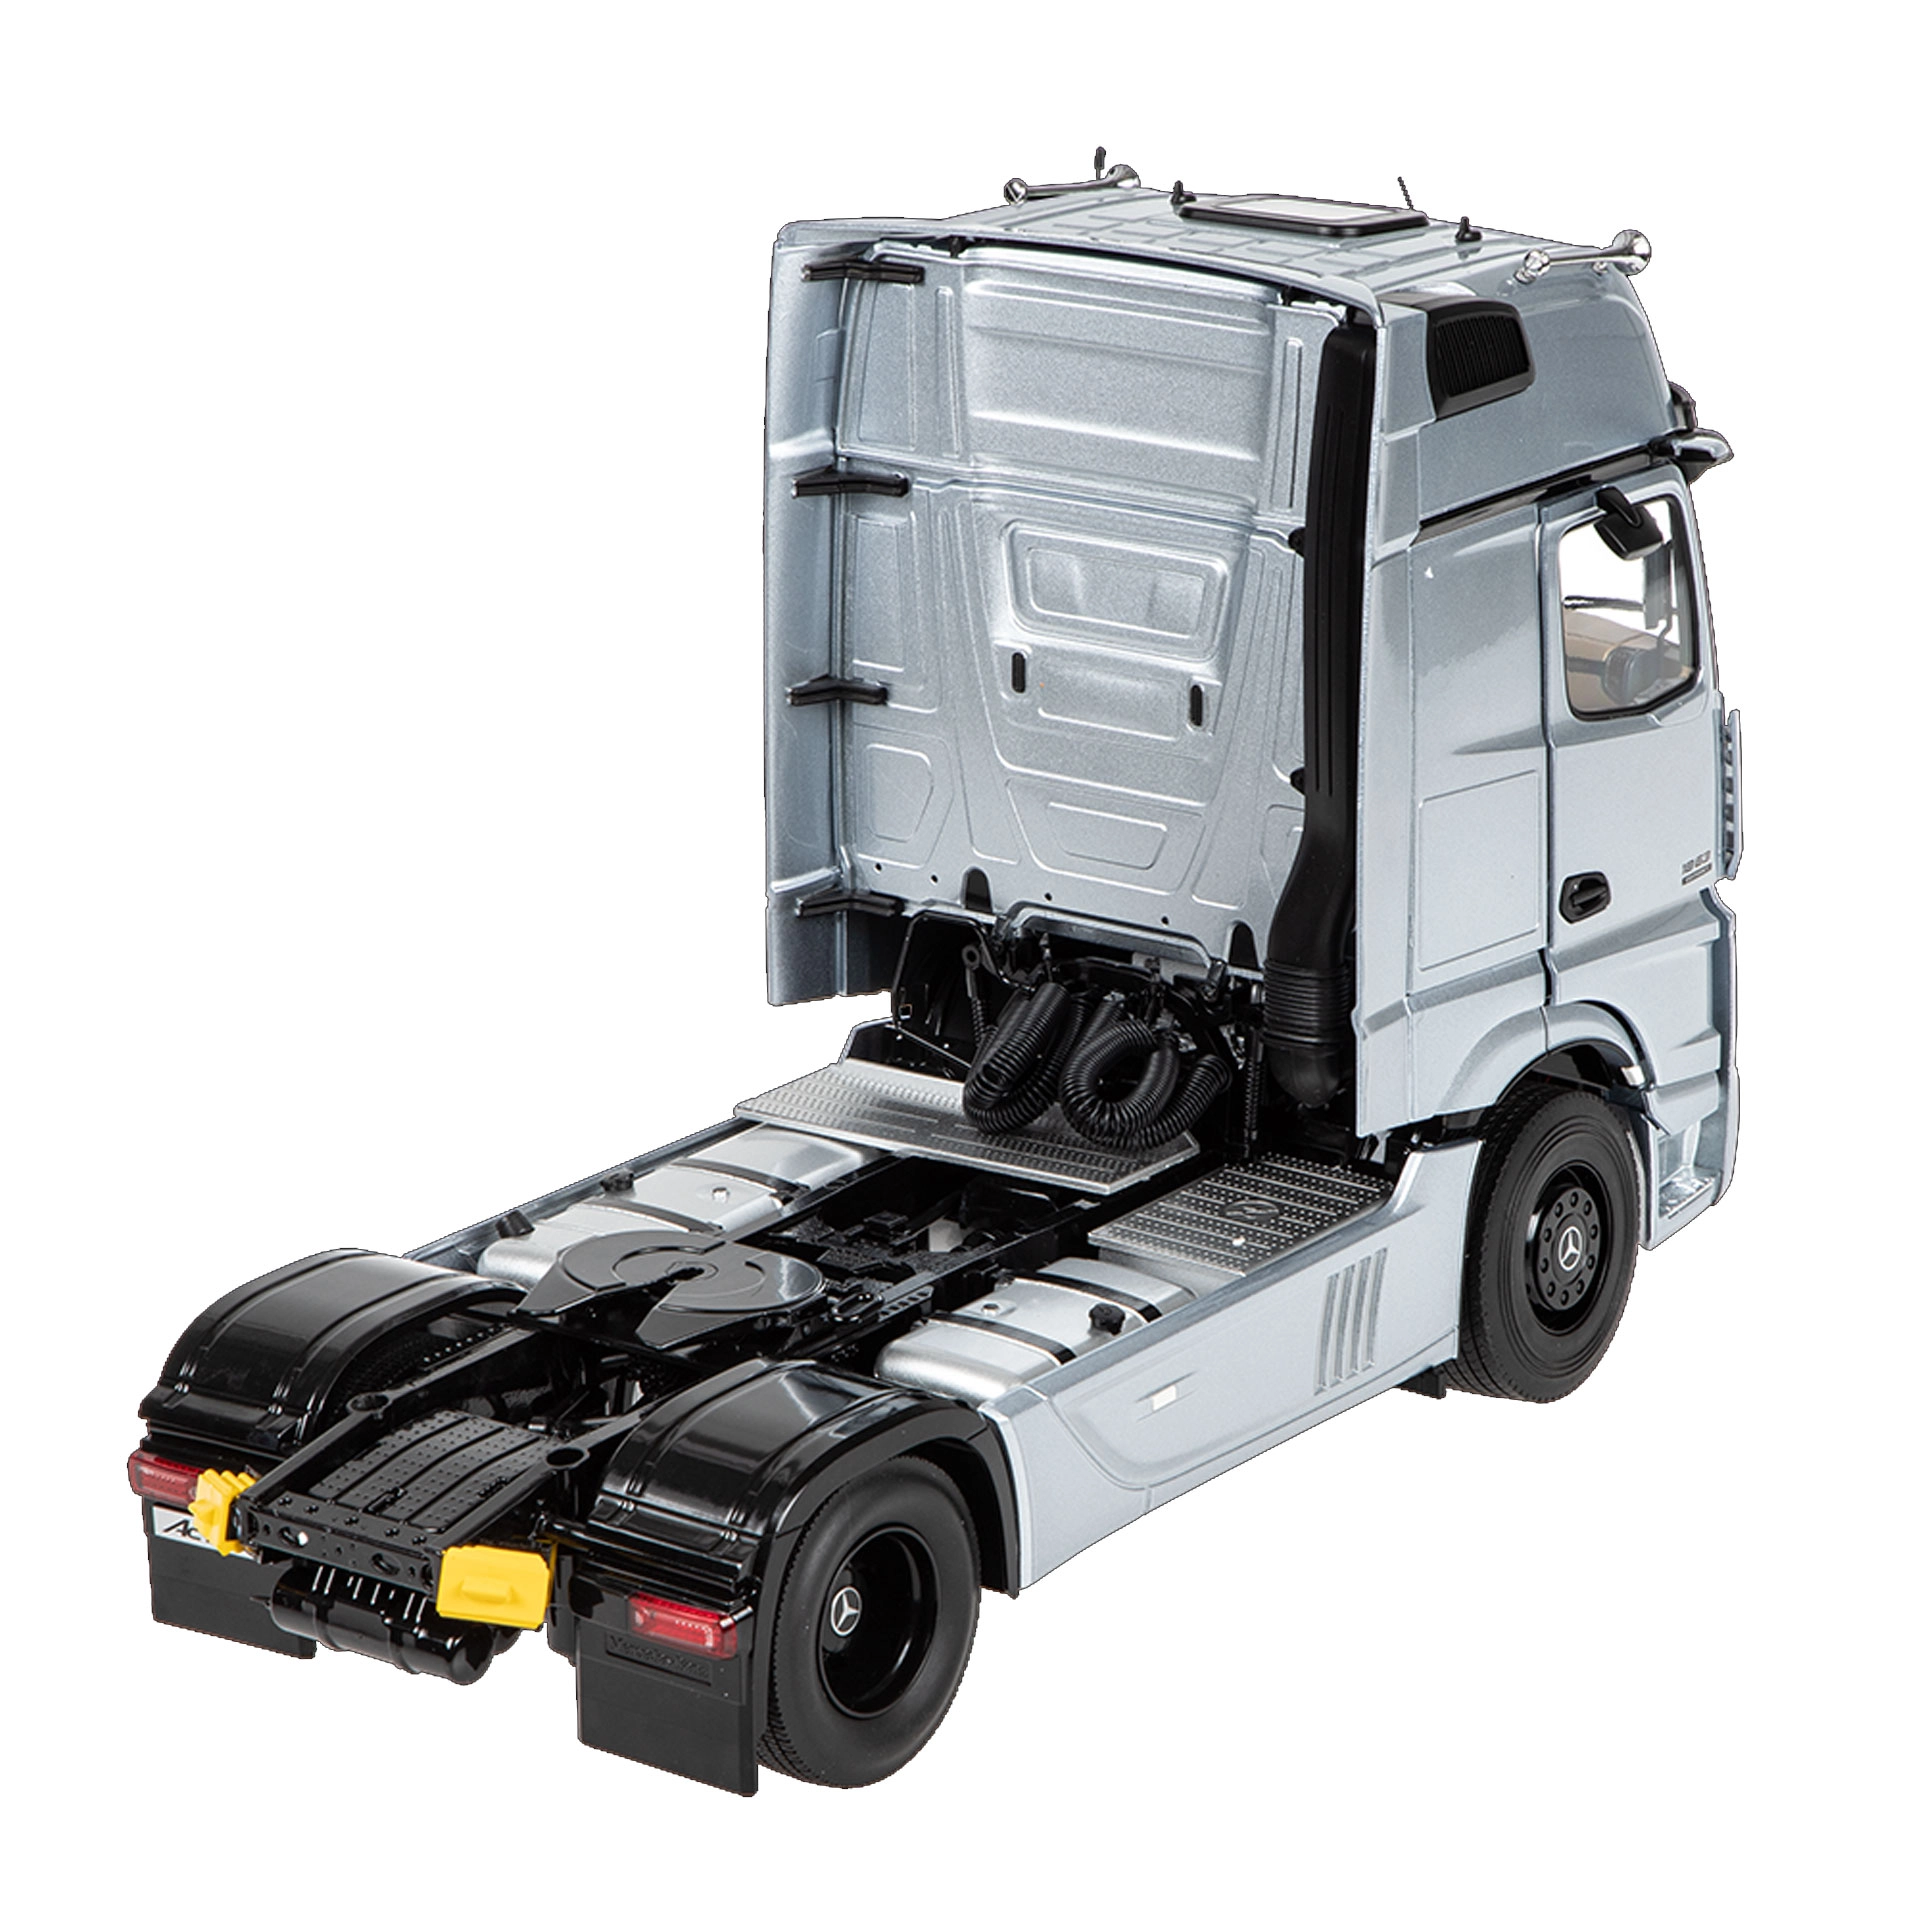 V66004211_mercedes-benz_trucks_modellauto_actros_autotransport_rosier-onlineshop2